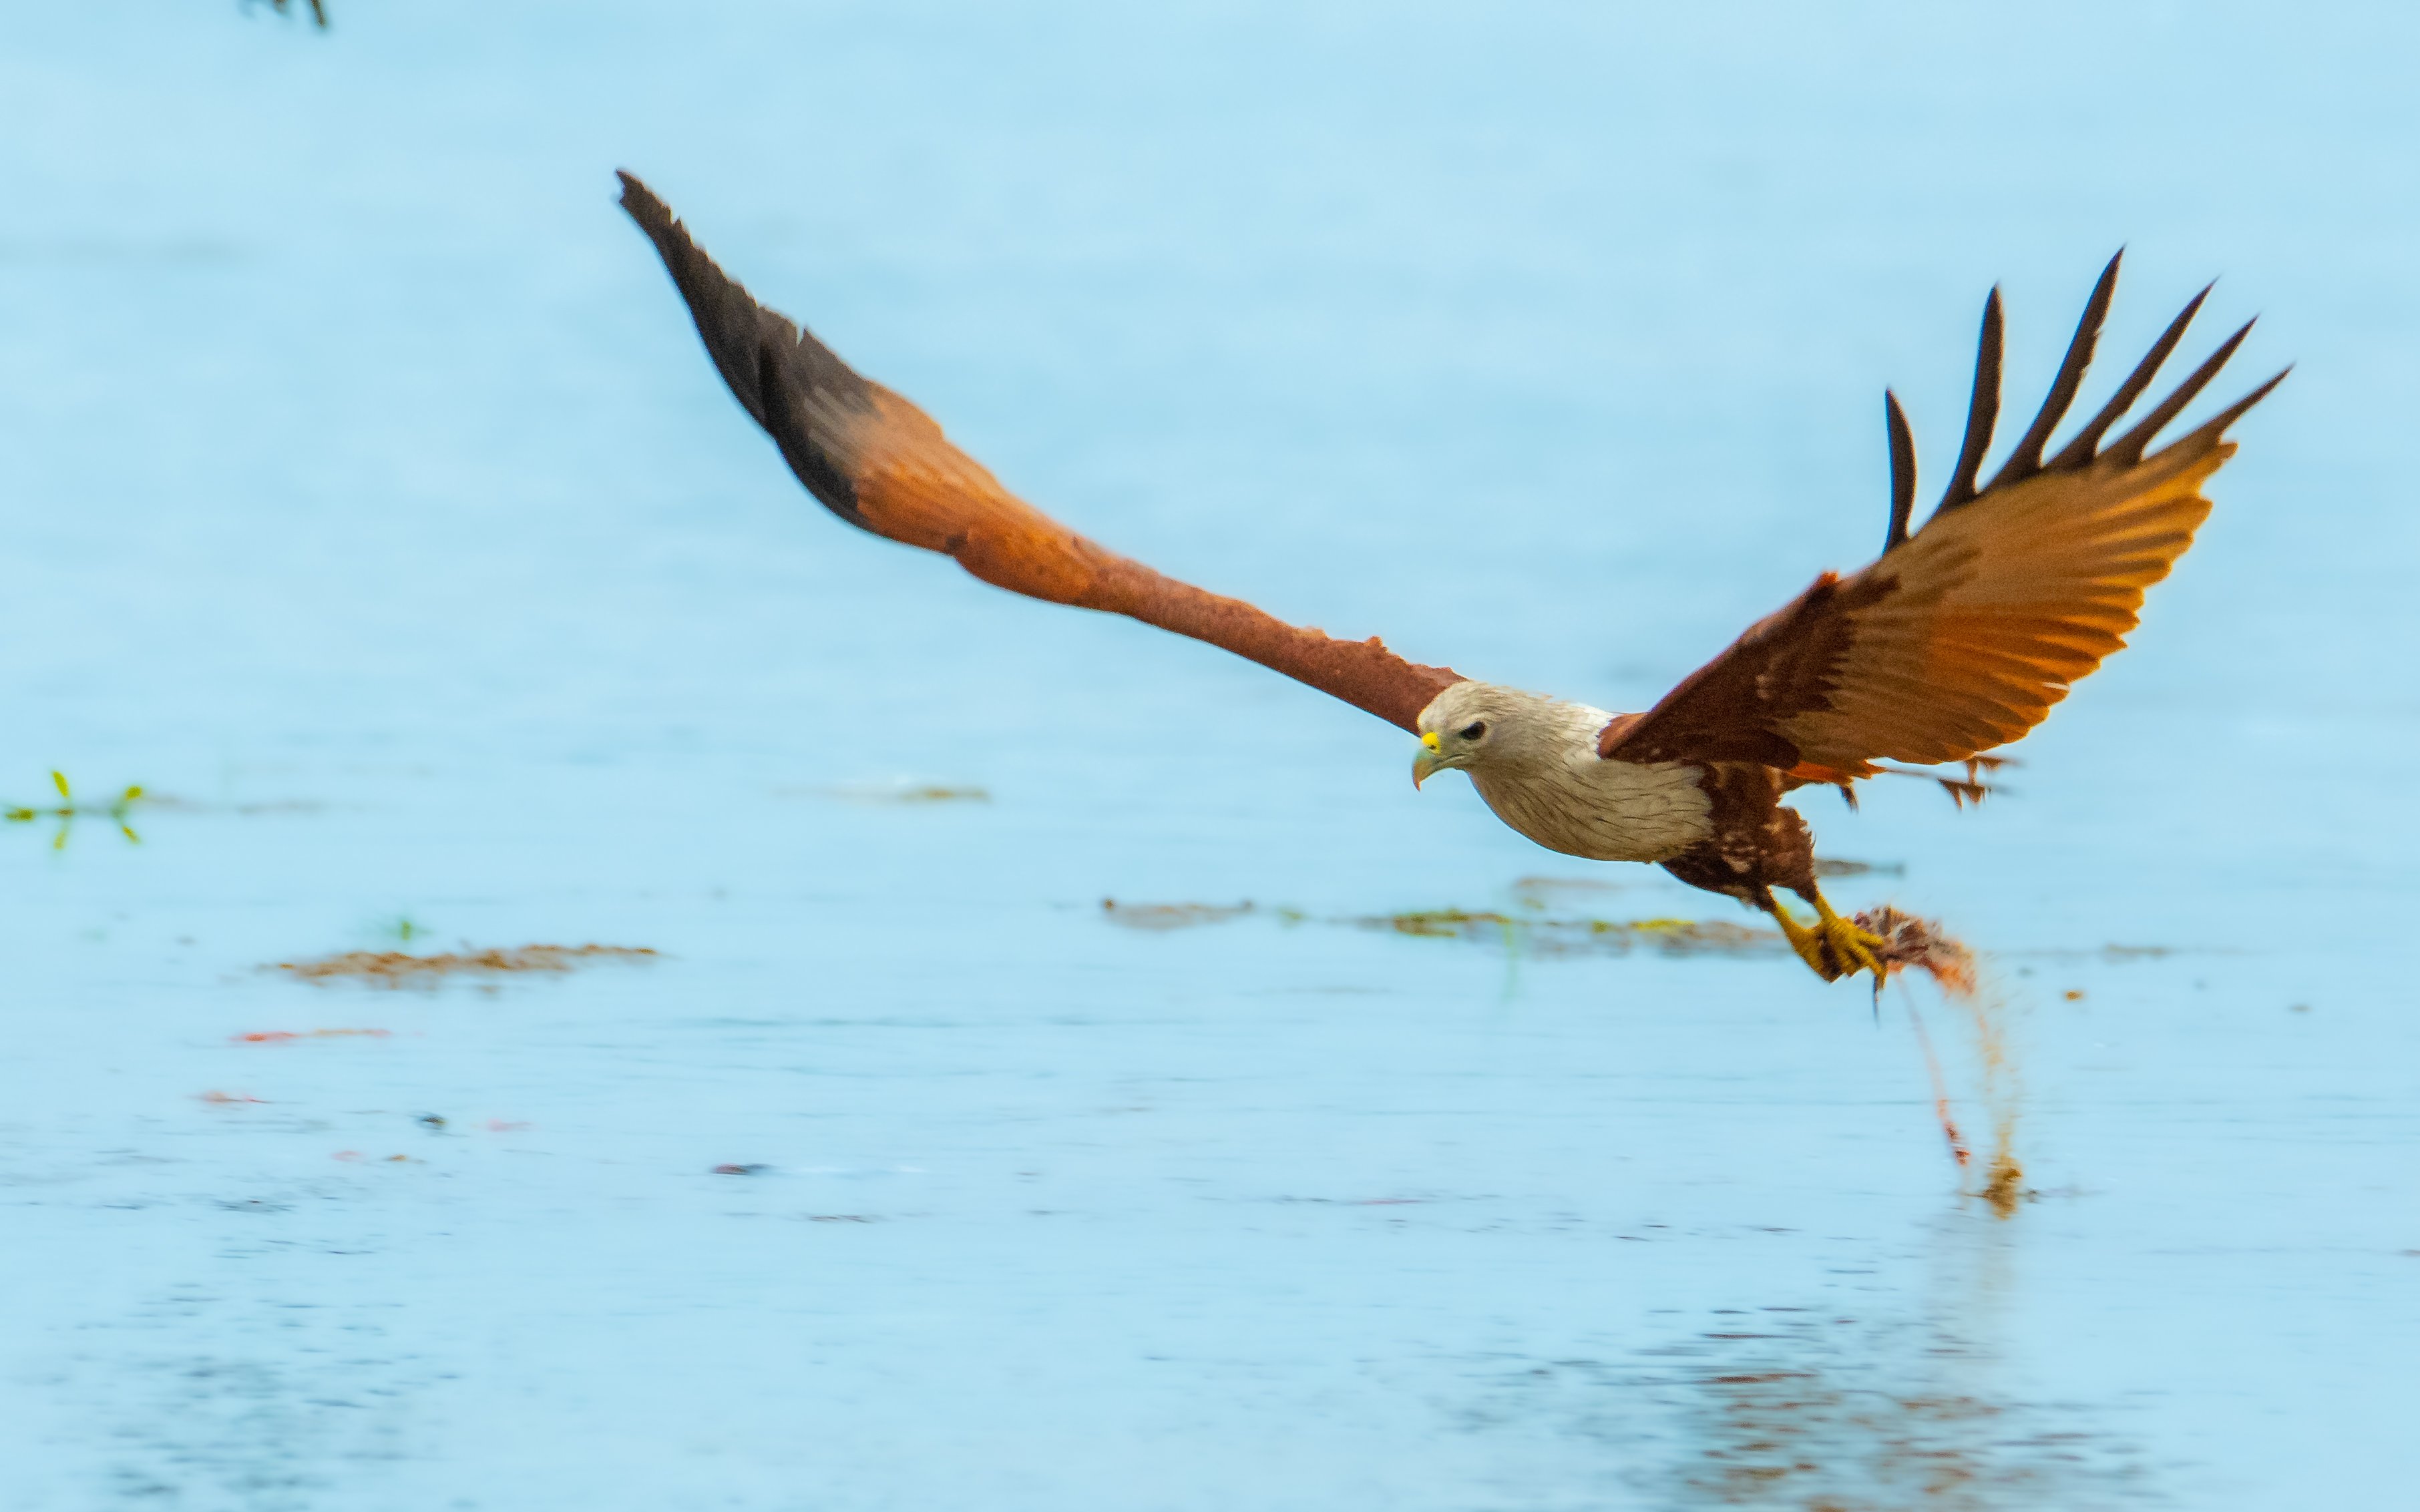 kite eagle raptor wings fly hunt predator prey kill catch, Nabarun Majumdar